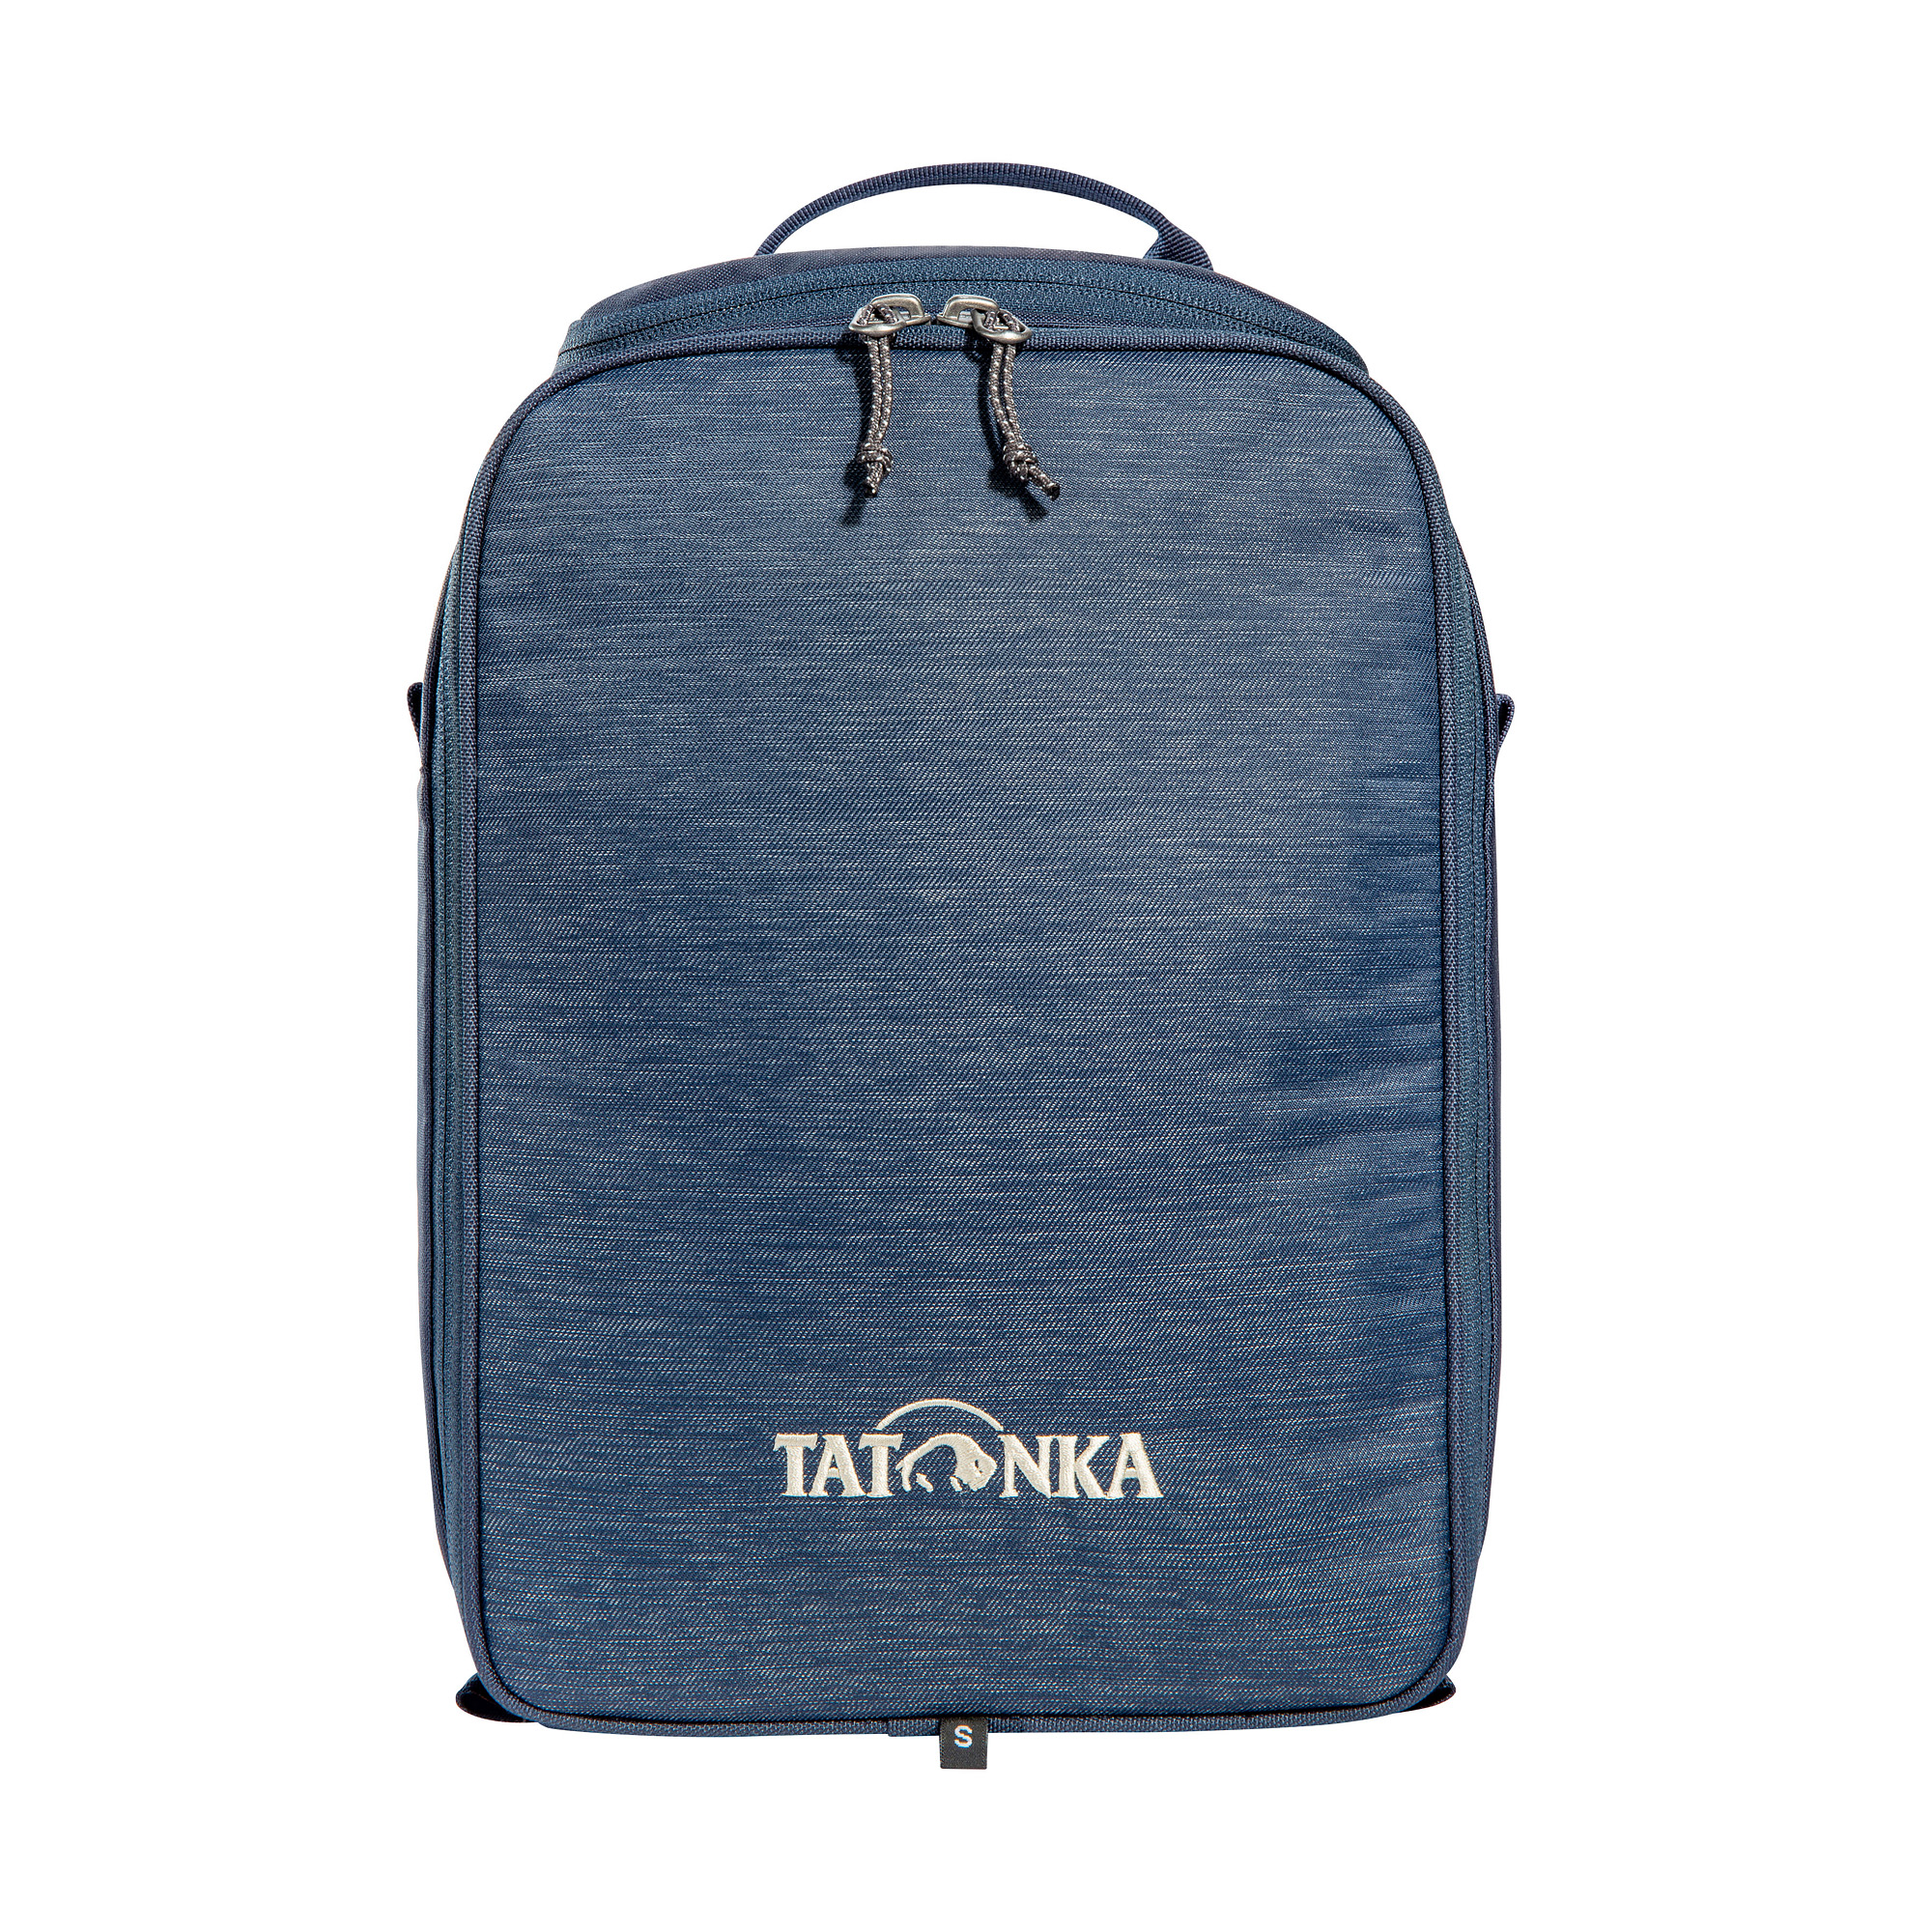 Tatonka Cooler Bag S navy blau Sonstige Taschen 4013236384536